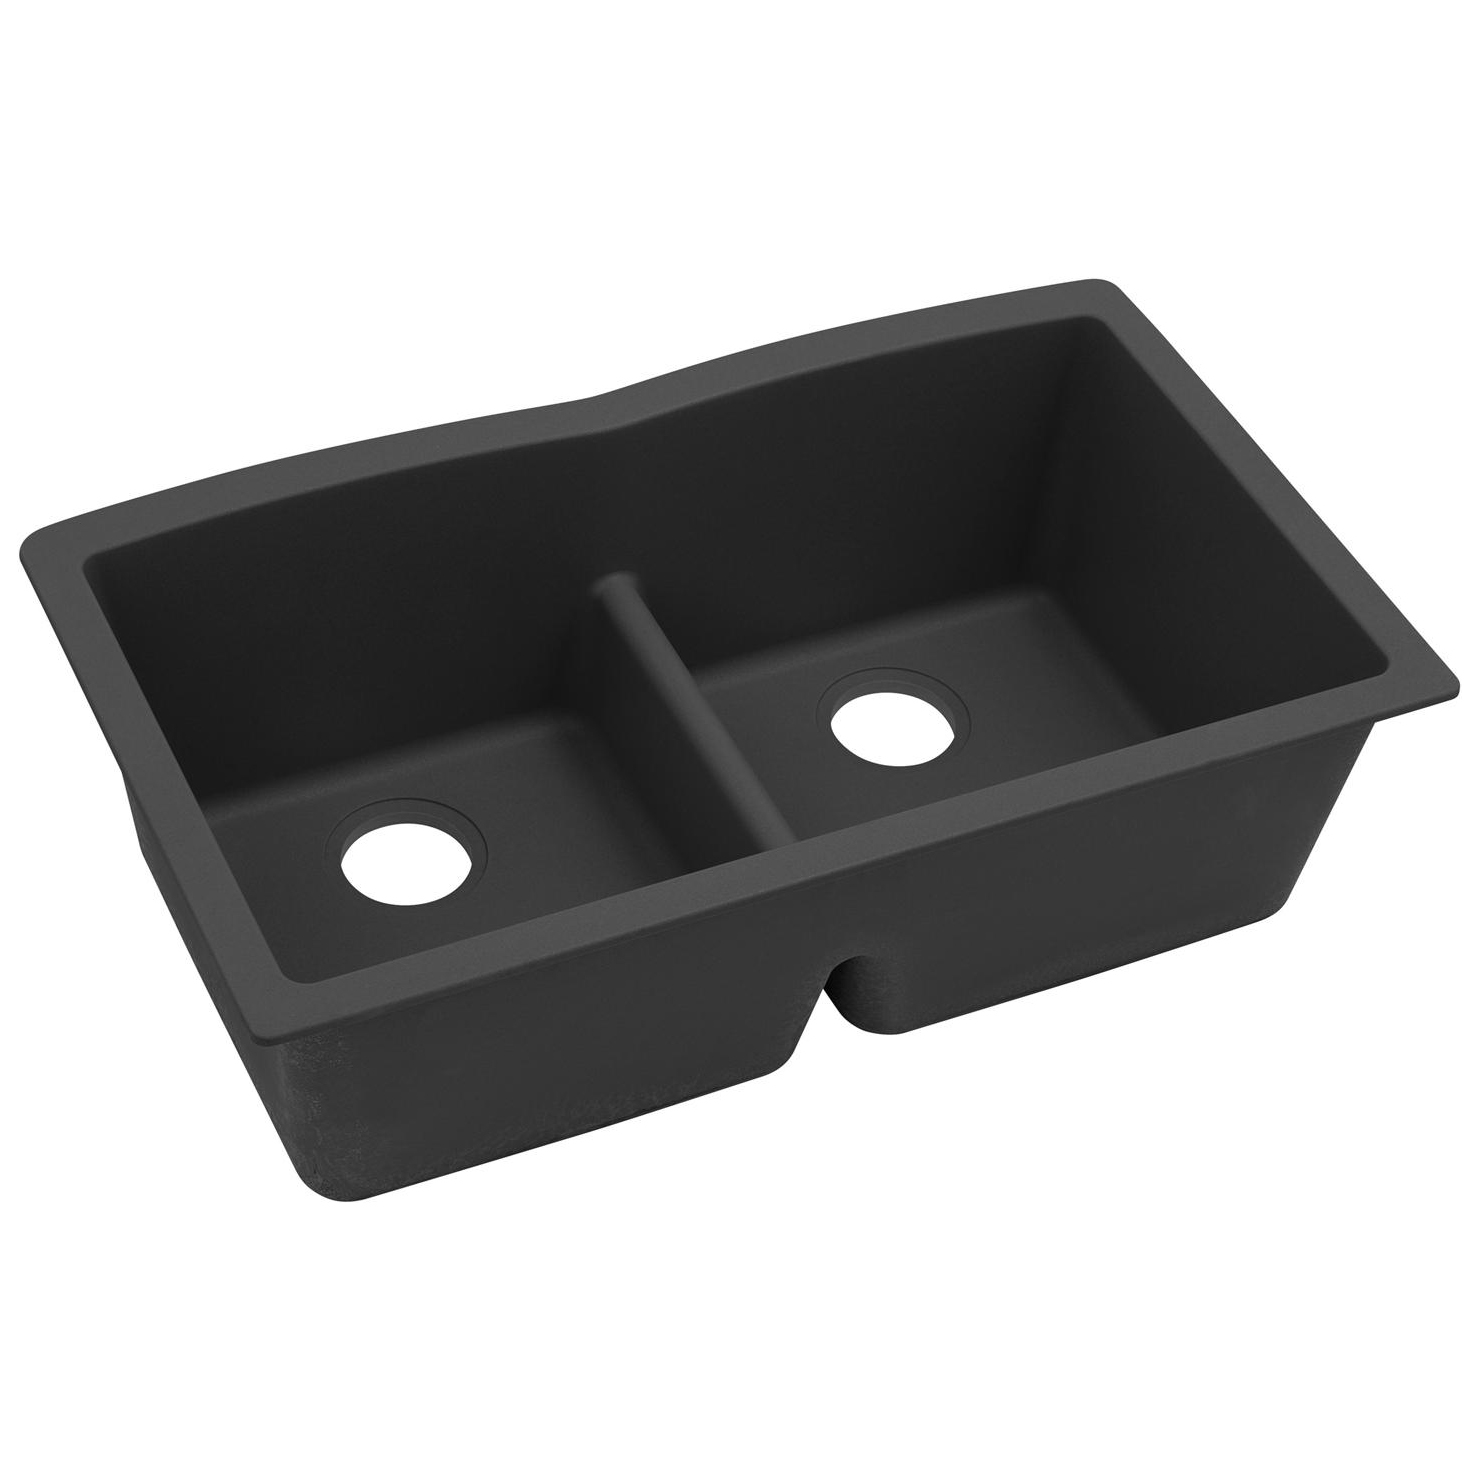 Quartz Classic 33x19x10" Equal Double Bowl Sink in Black